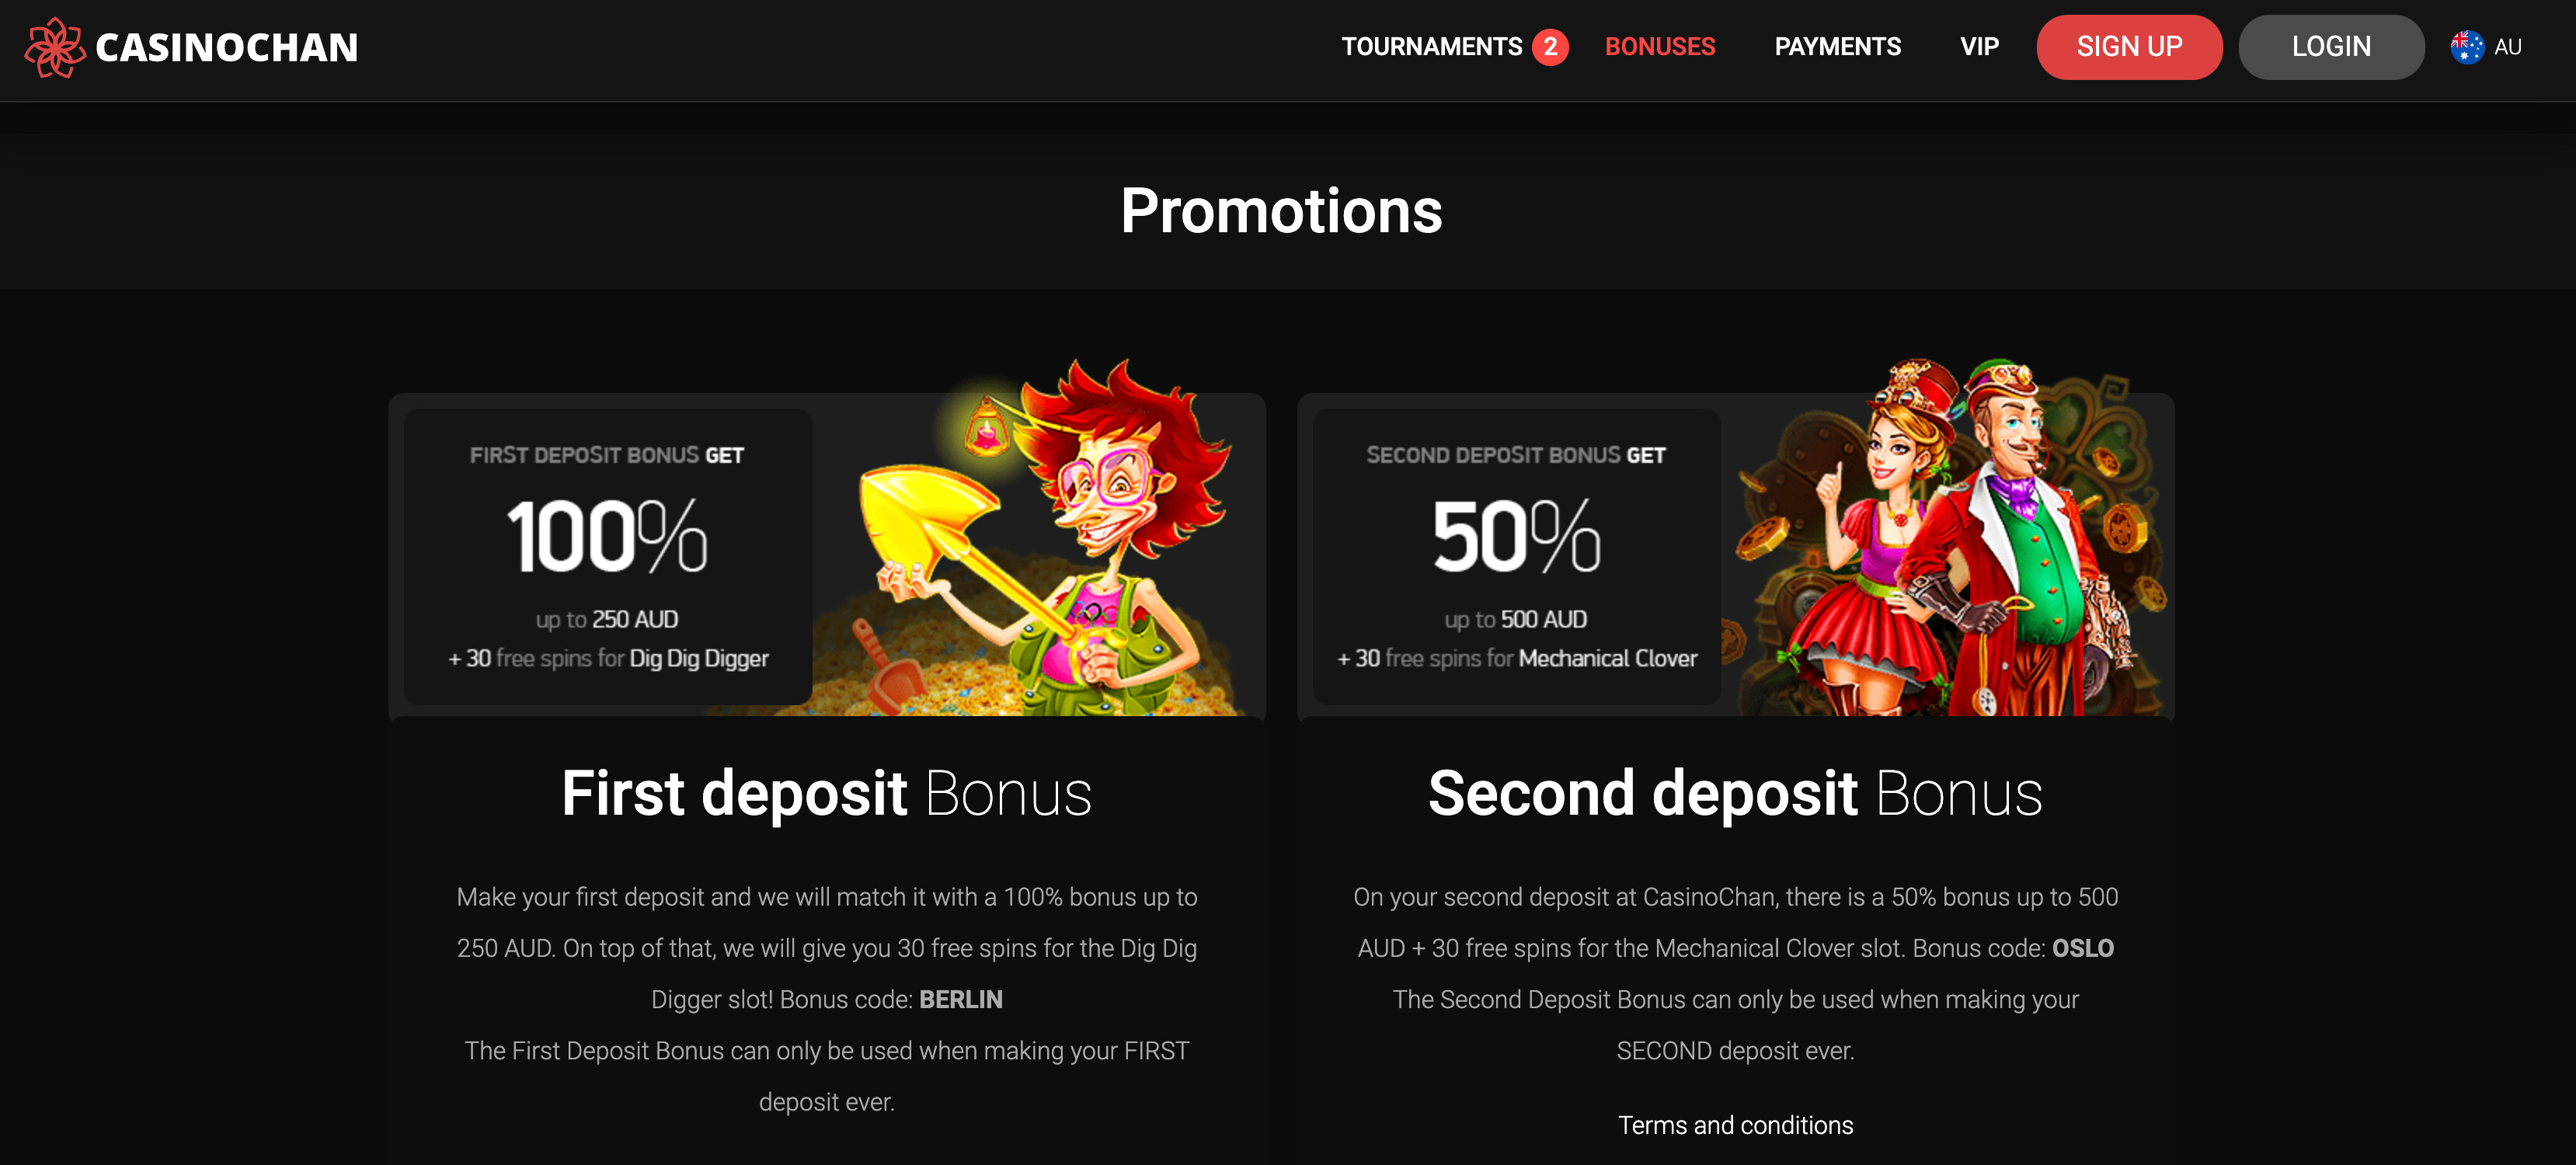 CasinoChan bonuses for aussie players